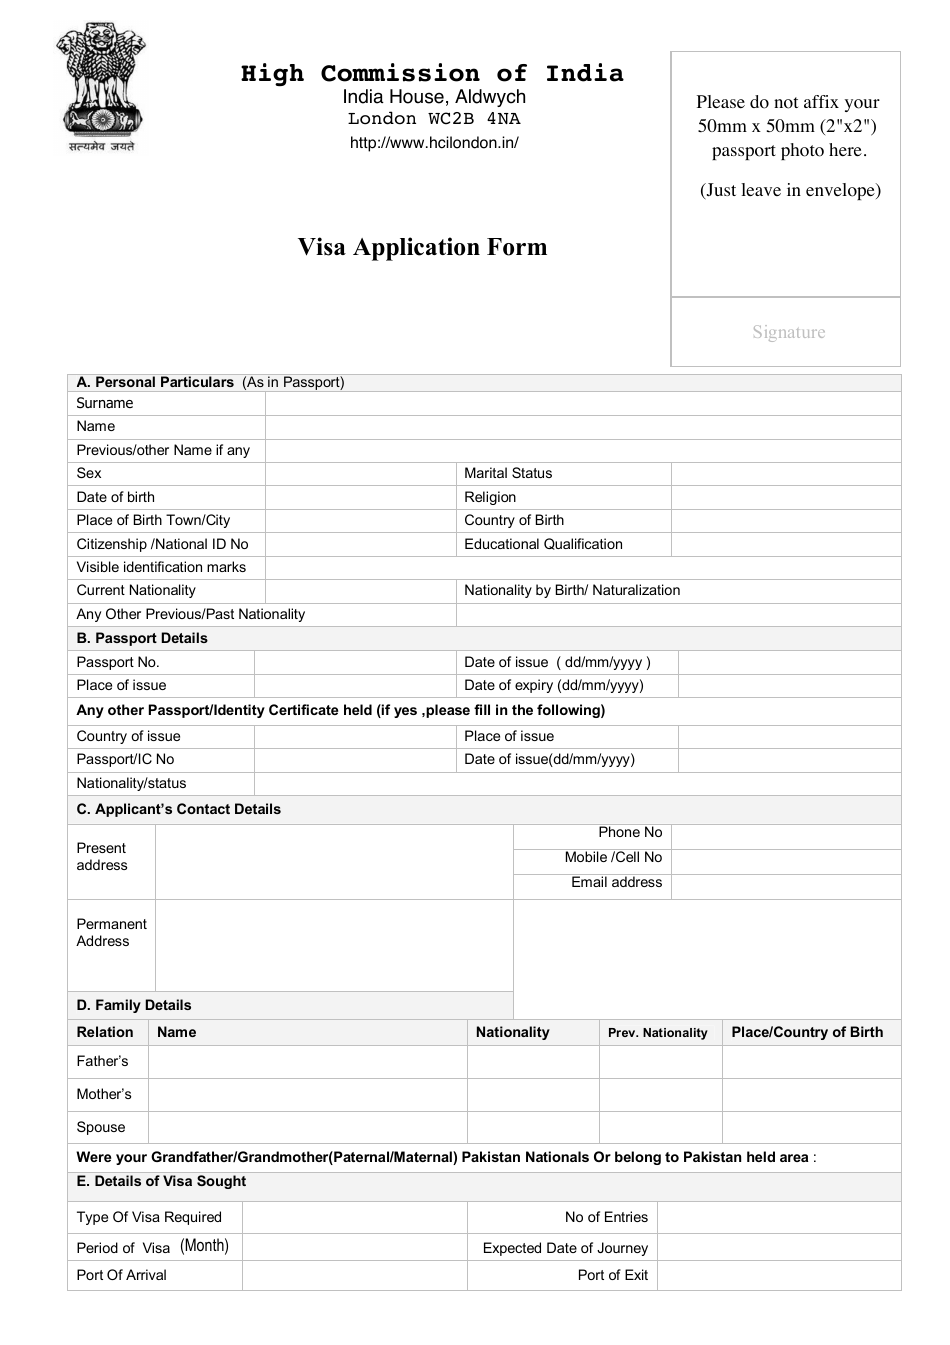 Indian Visa Application Form - High Commission of India, London, Uk - United Kingdom, Page 1